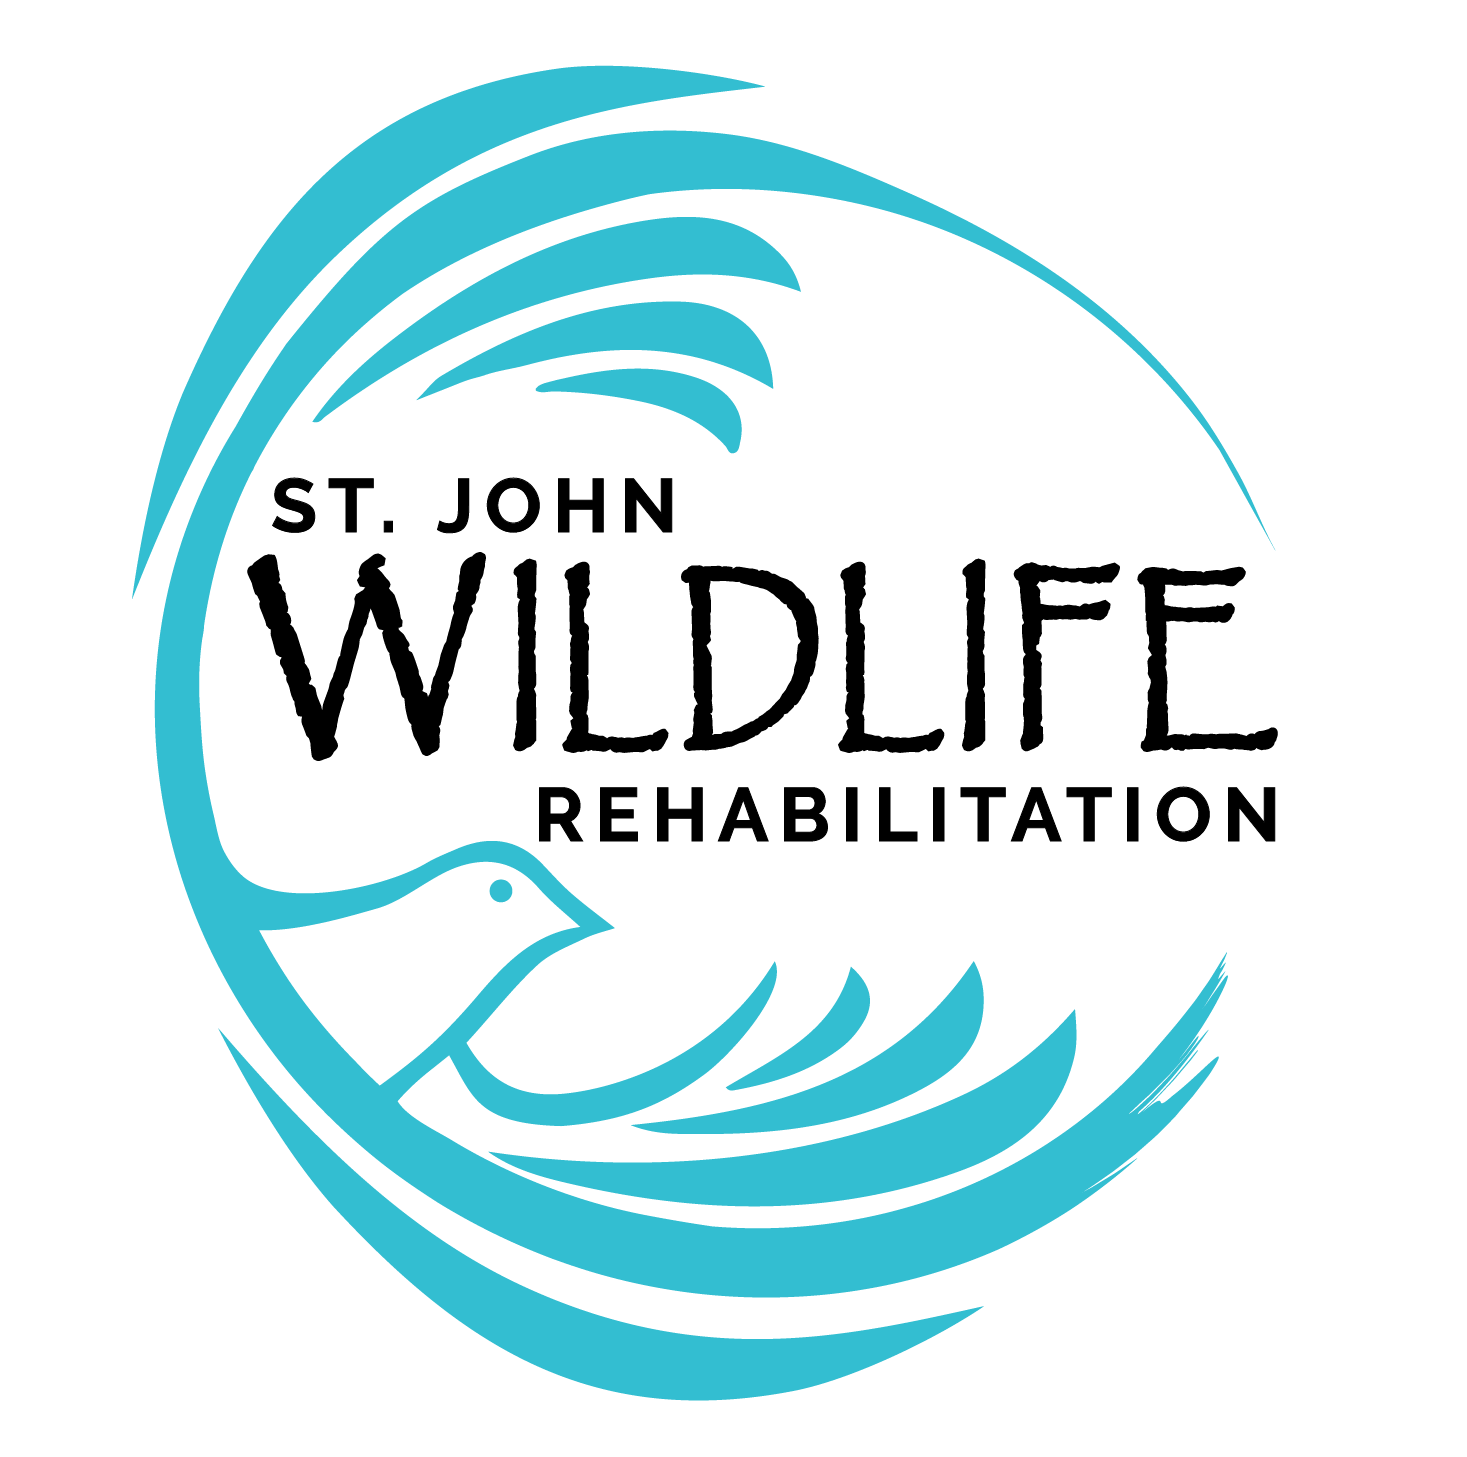 St John Wildlife Rehabilitation